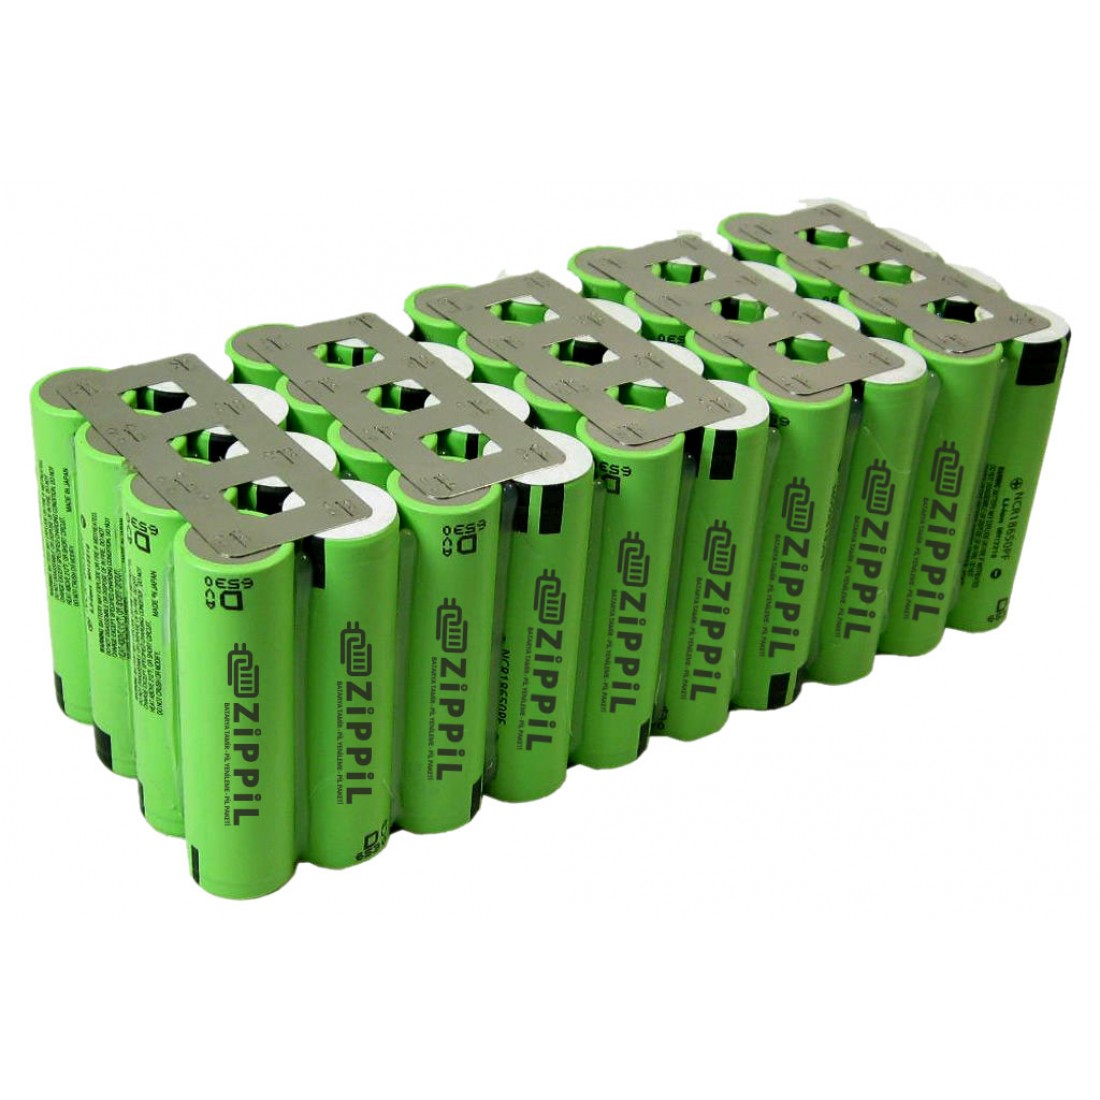 Батарея battery pack